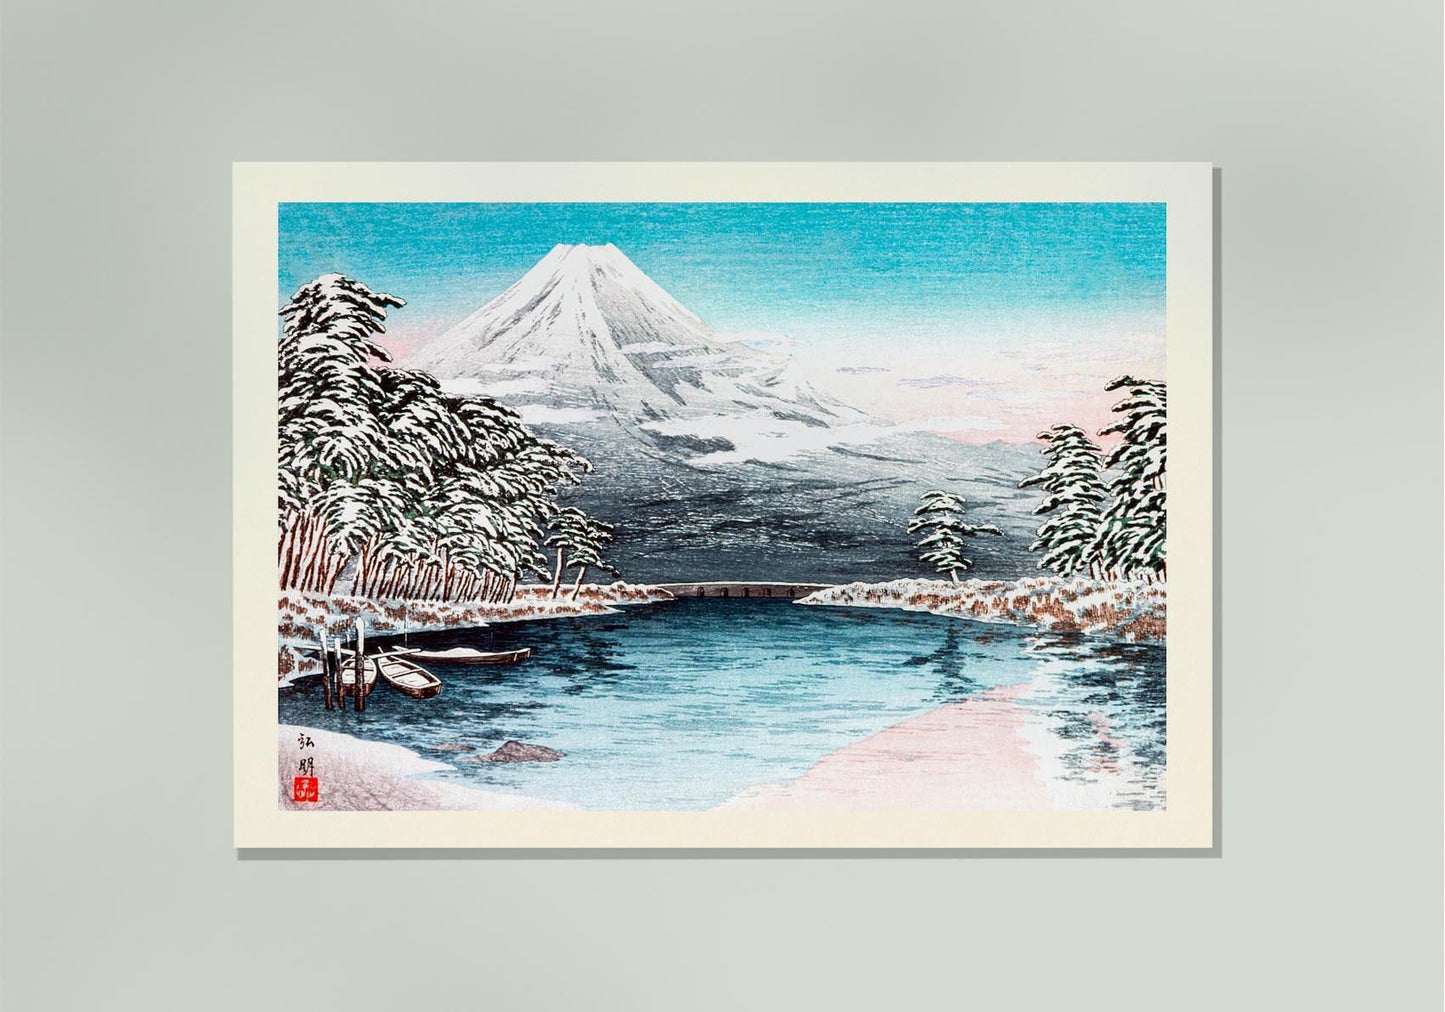 Mount Fuji from Tagonoura by Takahashi Shōtei